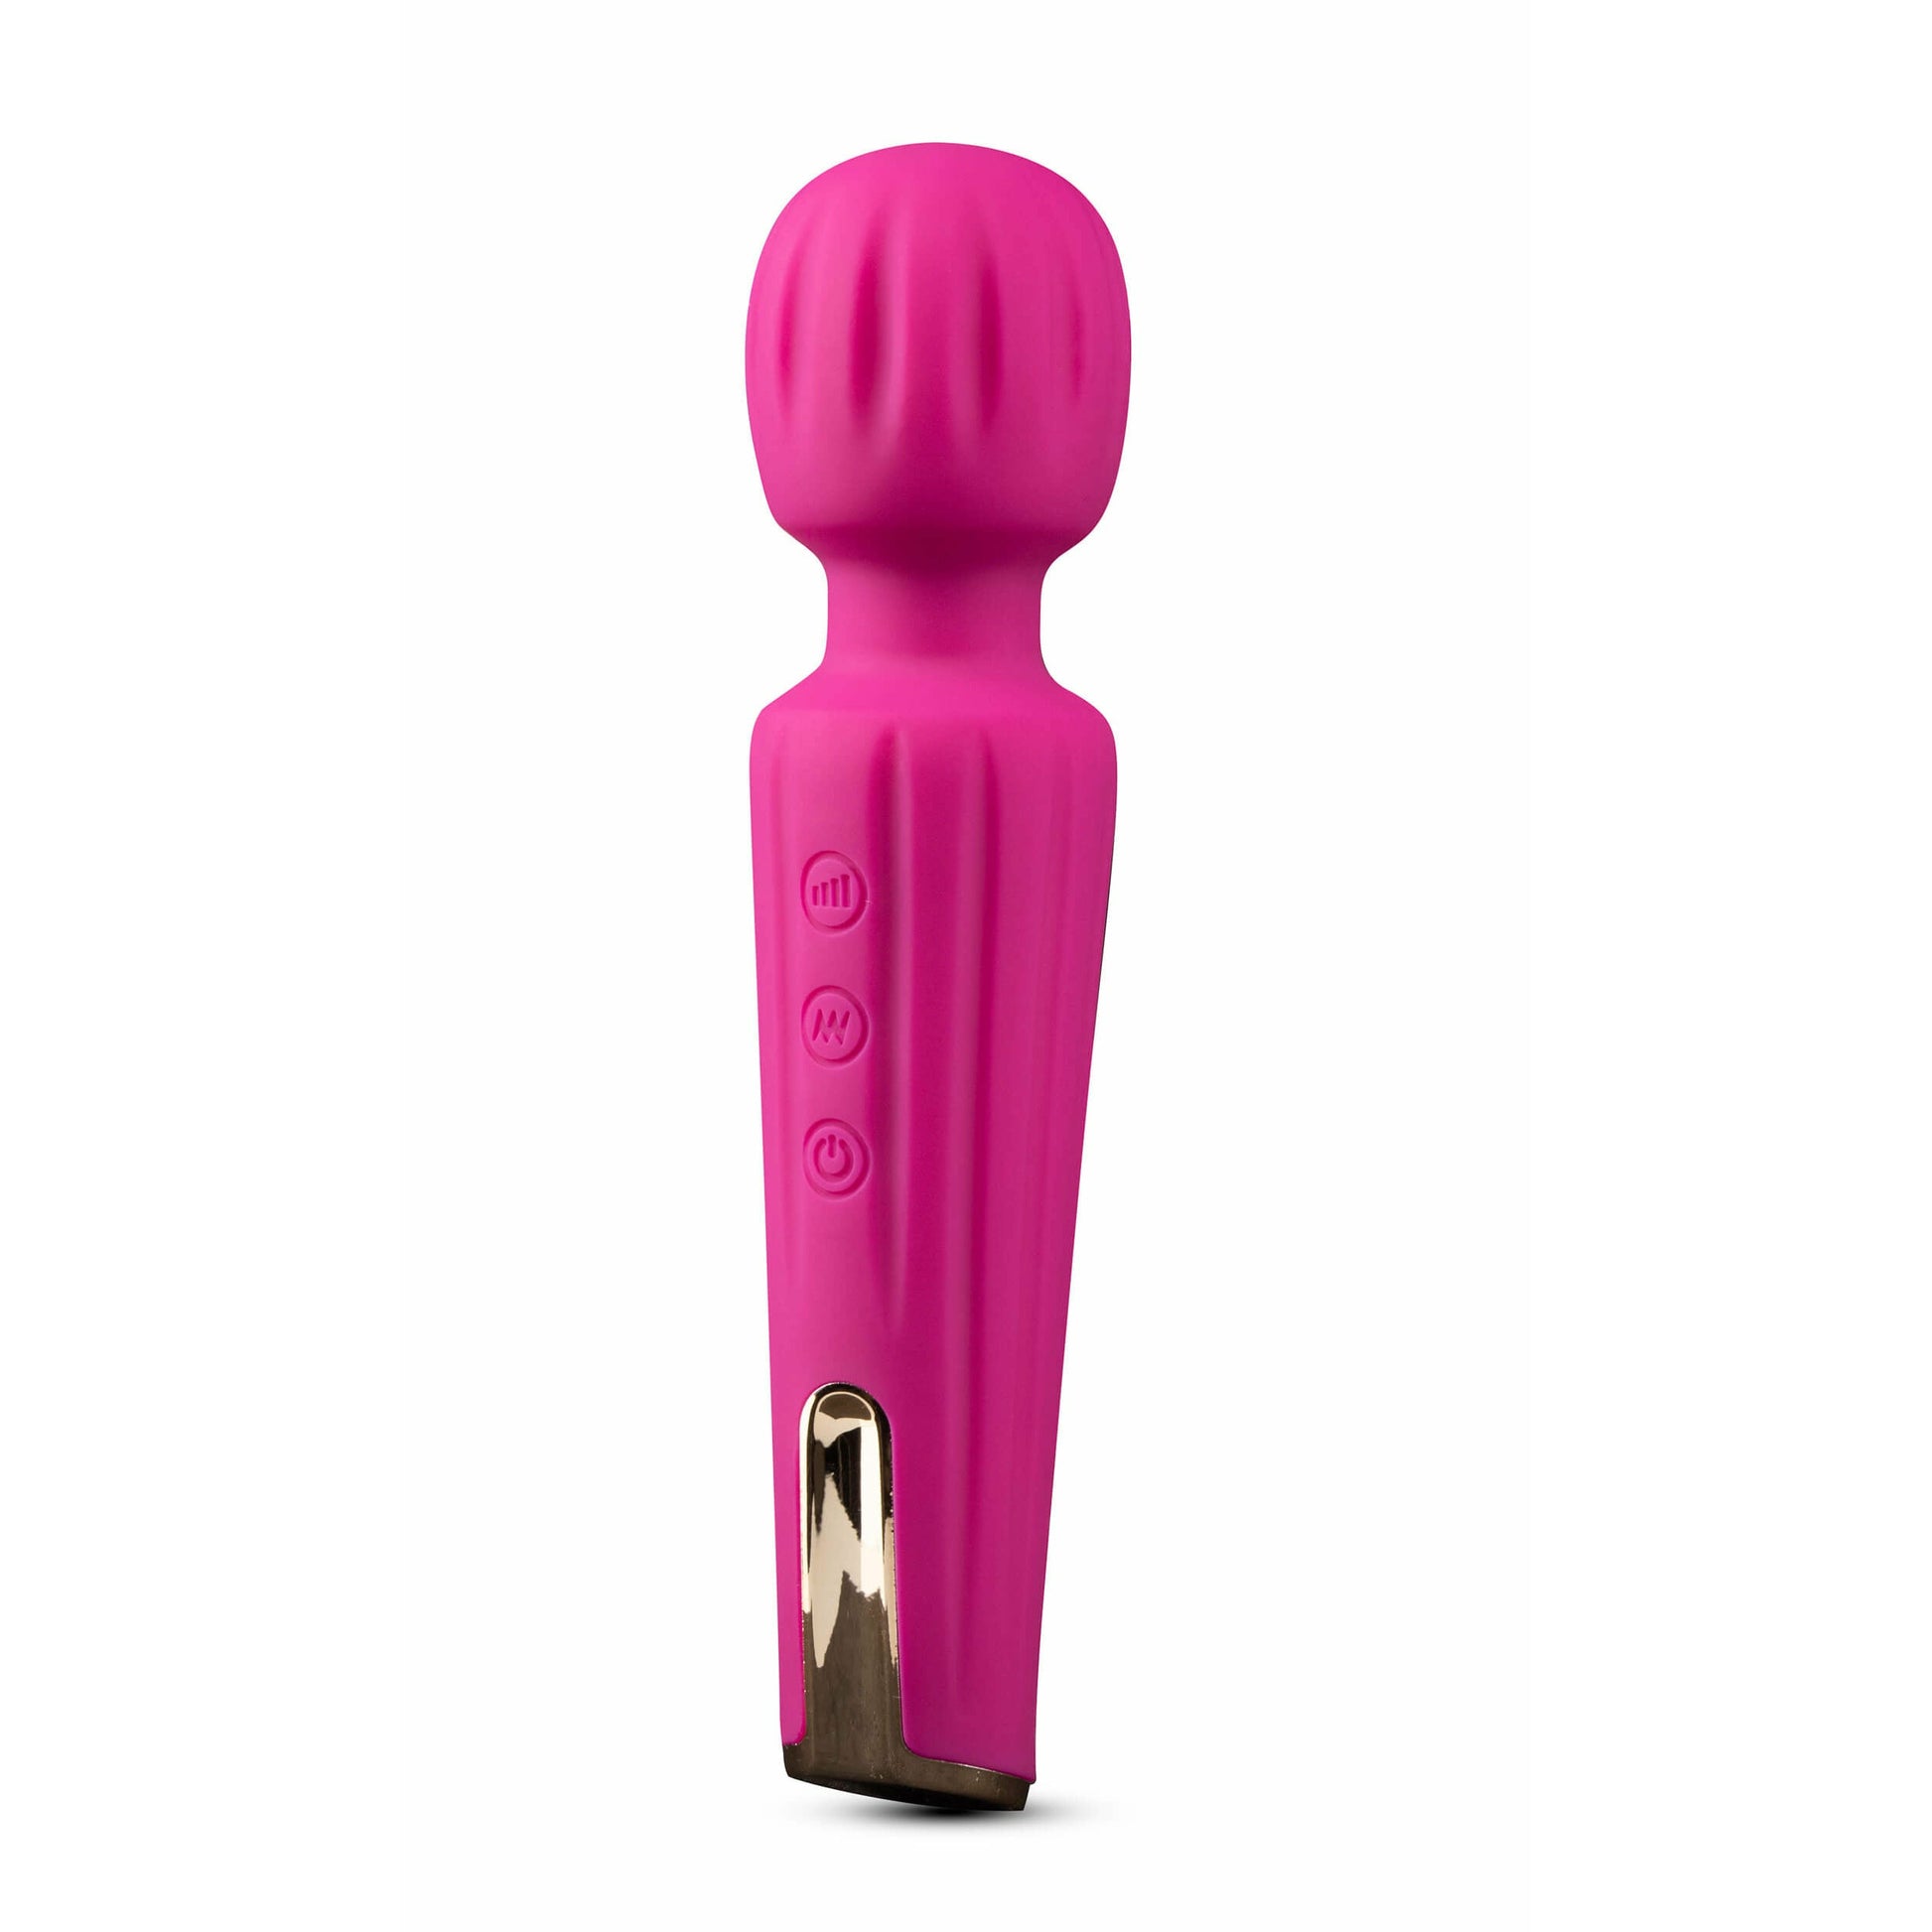 Blush Lush Allana Wand Vibrator - Blush Novelties - by The Bigger O online sex toy shop - USA, Canada & UK shipping available.